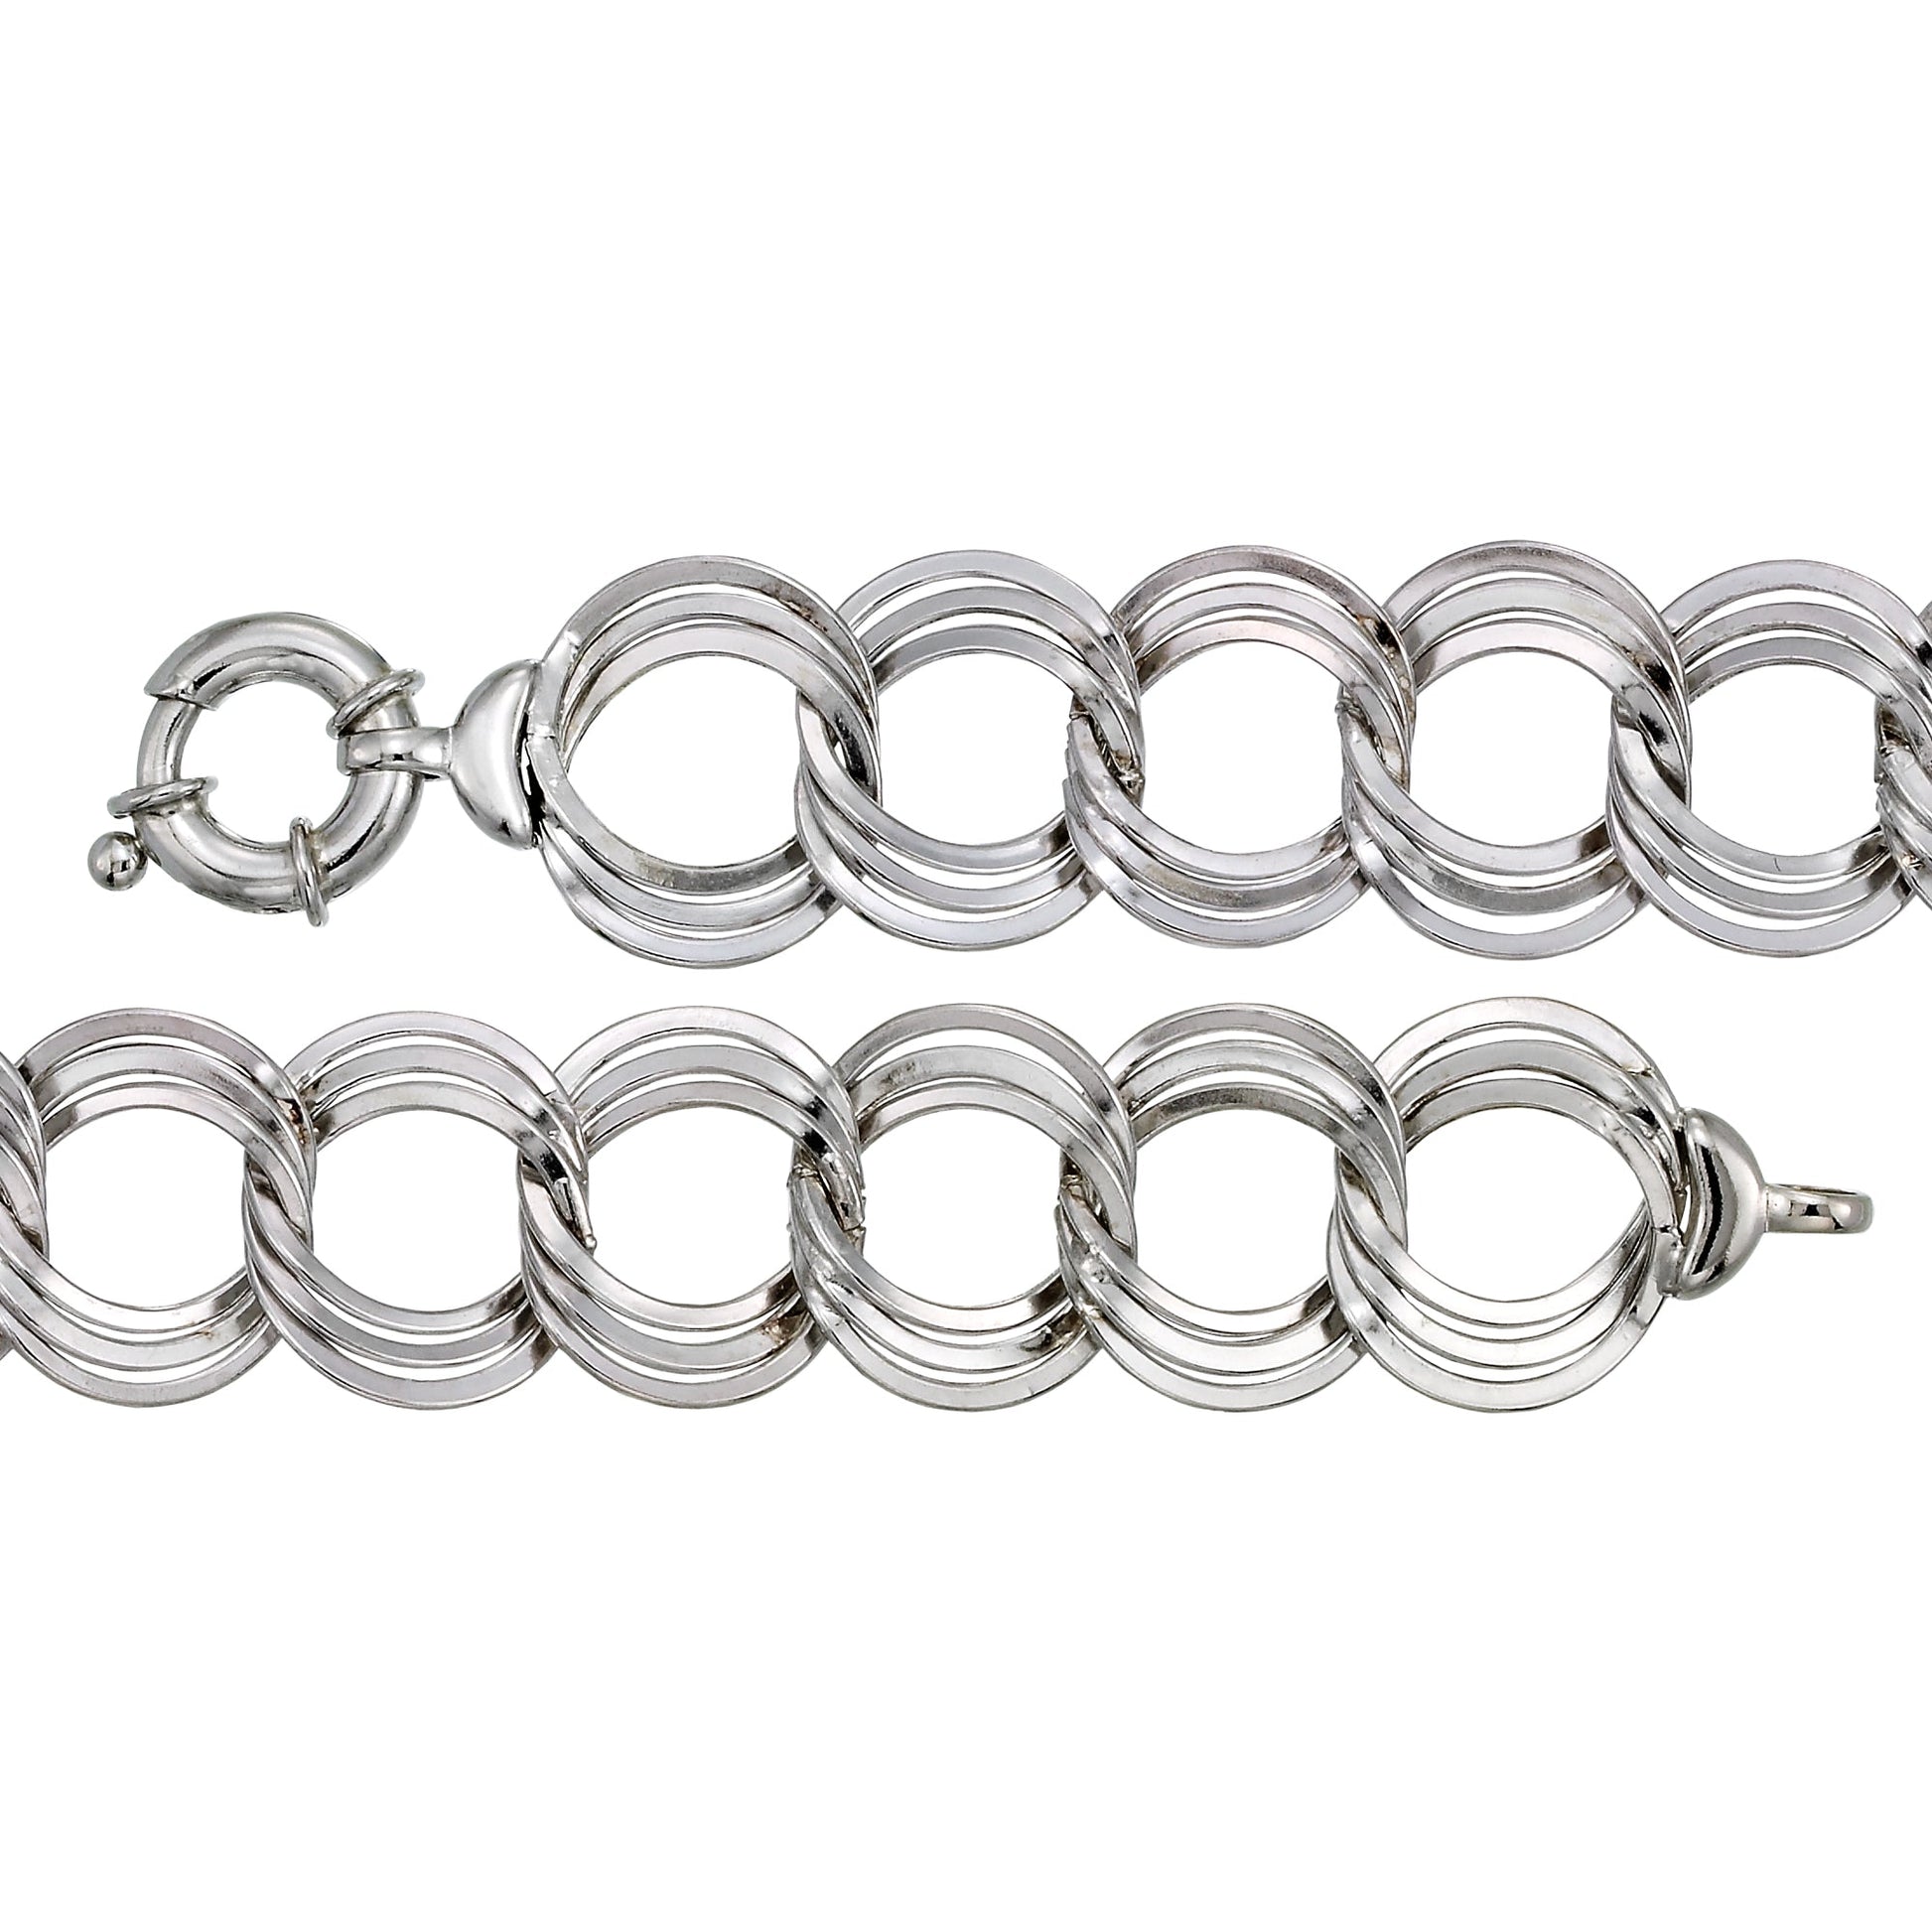 Franco Stellari Italian Sterling Silver Polished Triple Link Bracelet, 7.5"